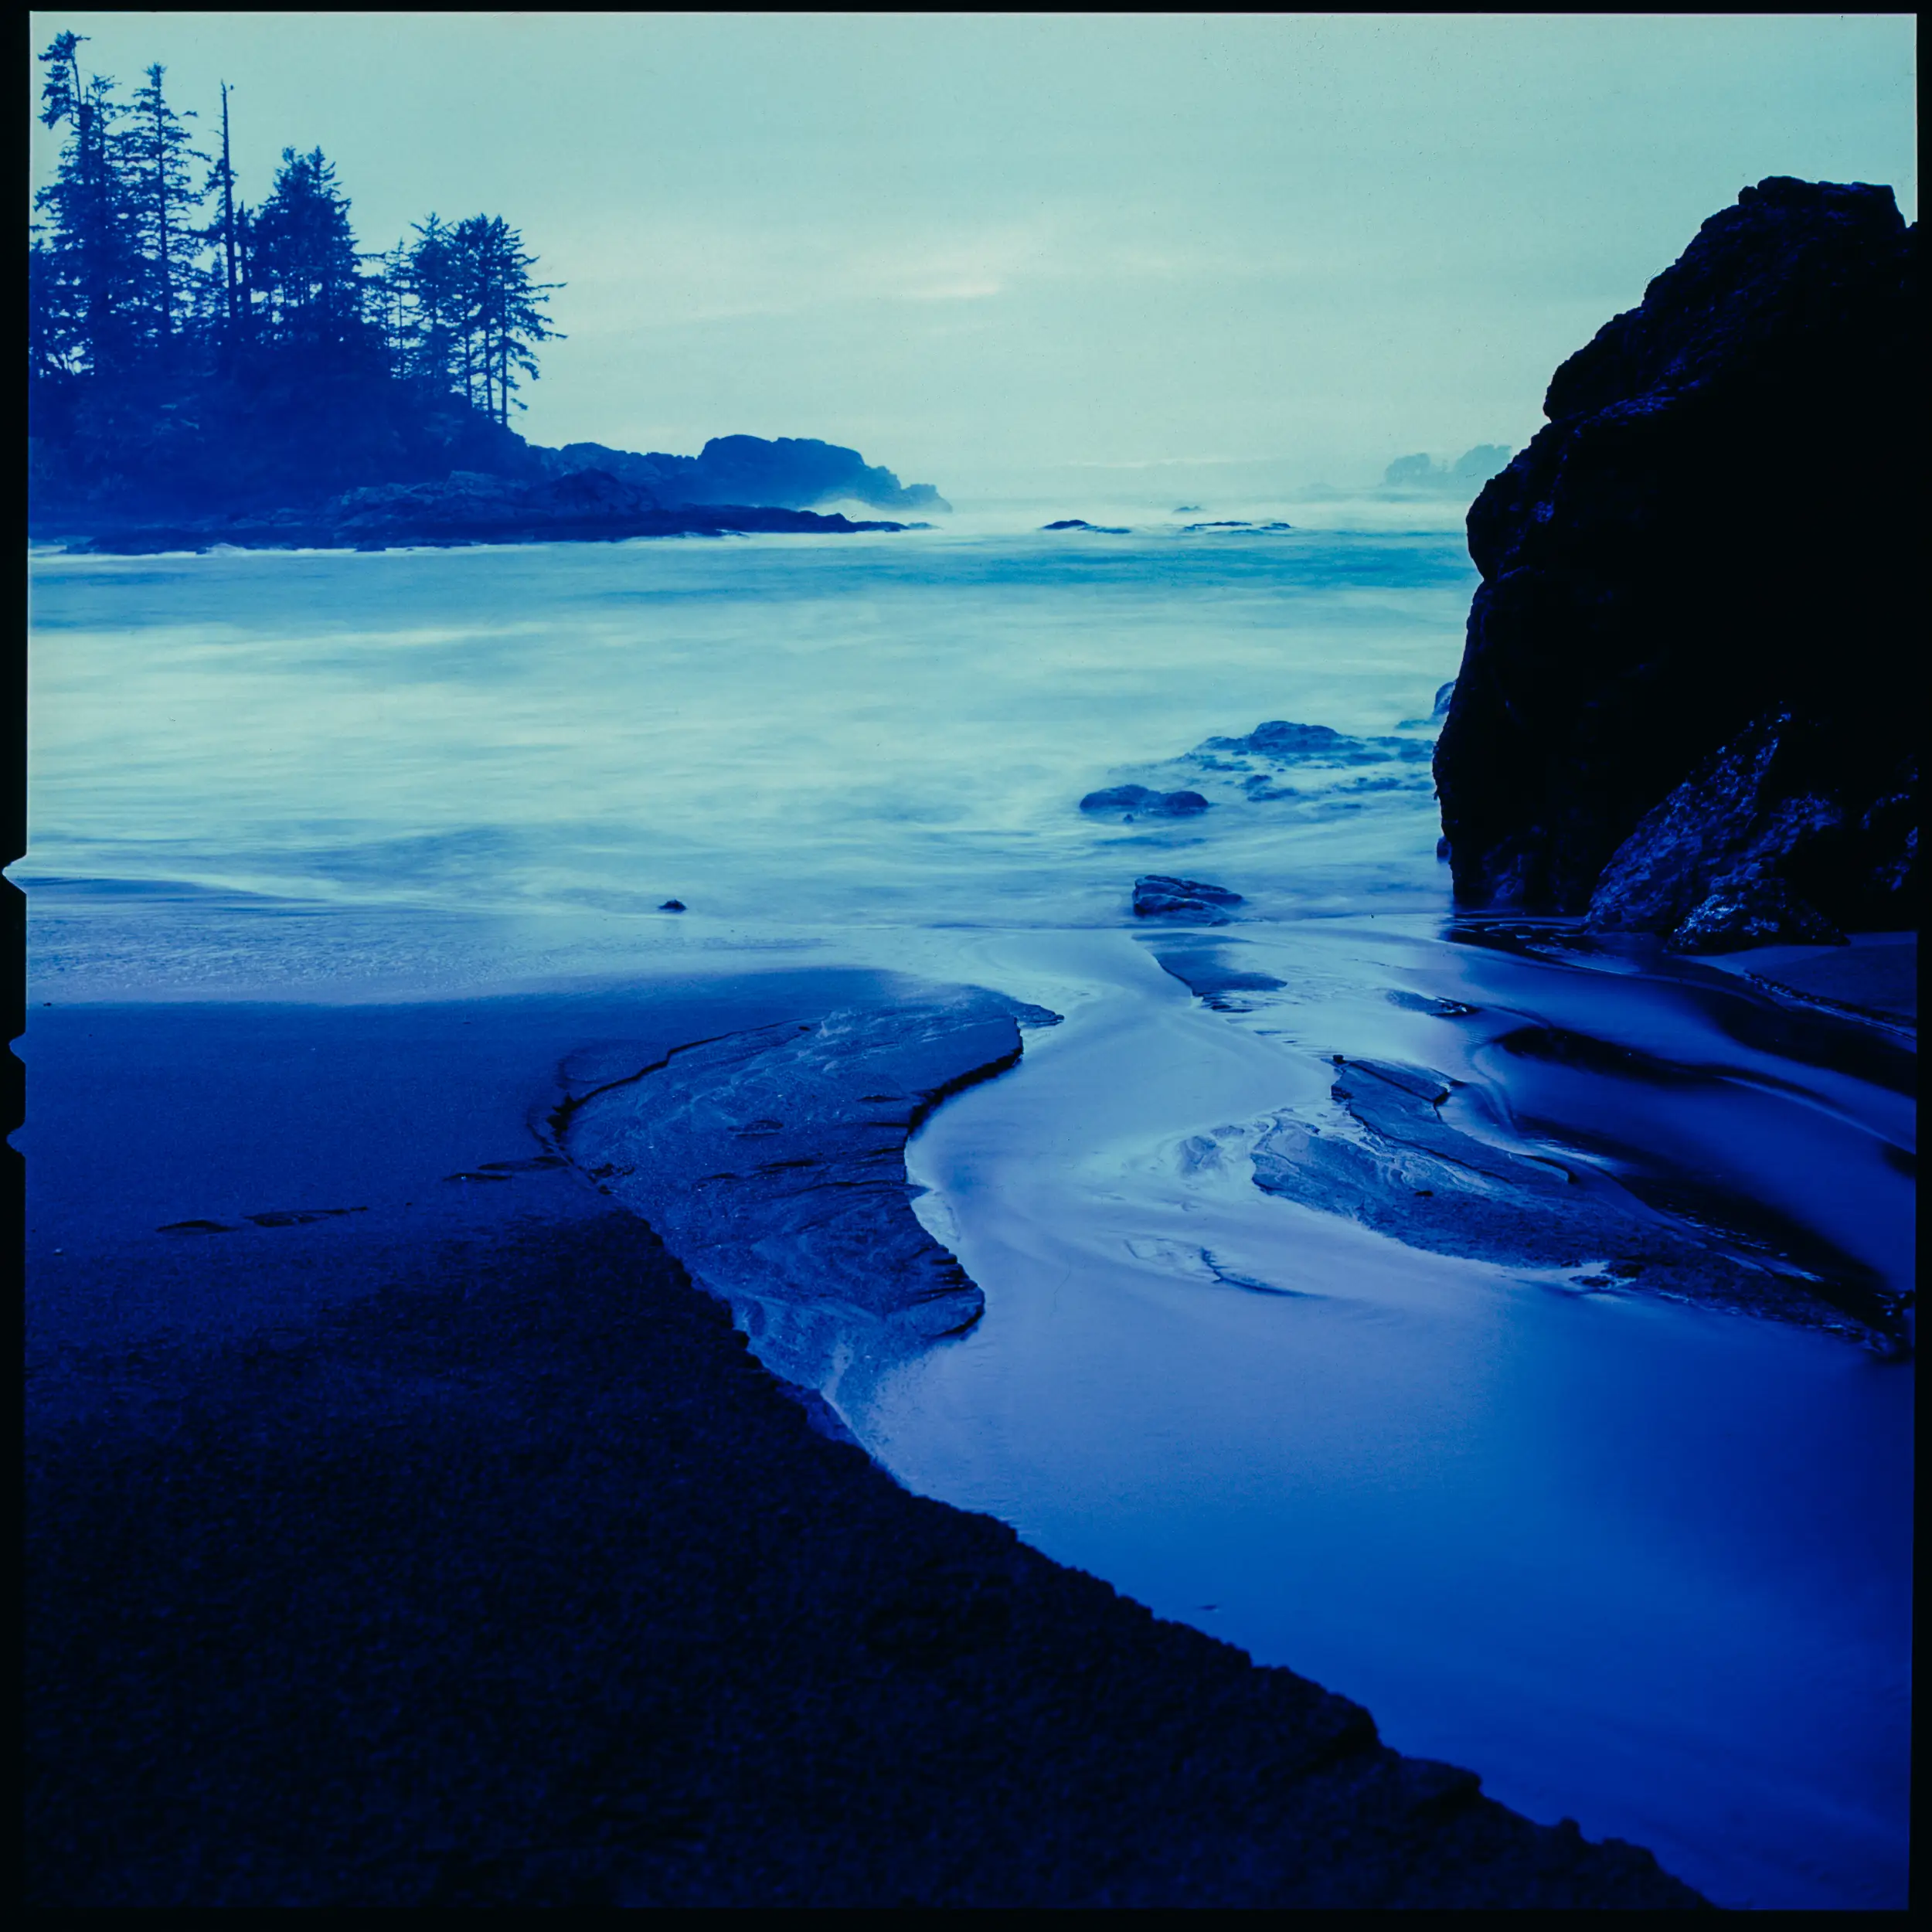 Perry, Blue Hour II Half Moon Bay Study - West Coast Visions